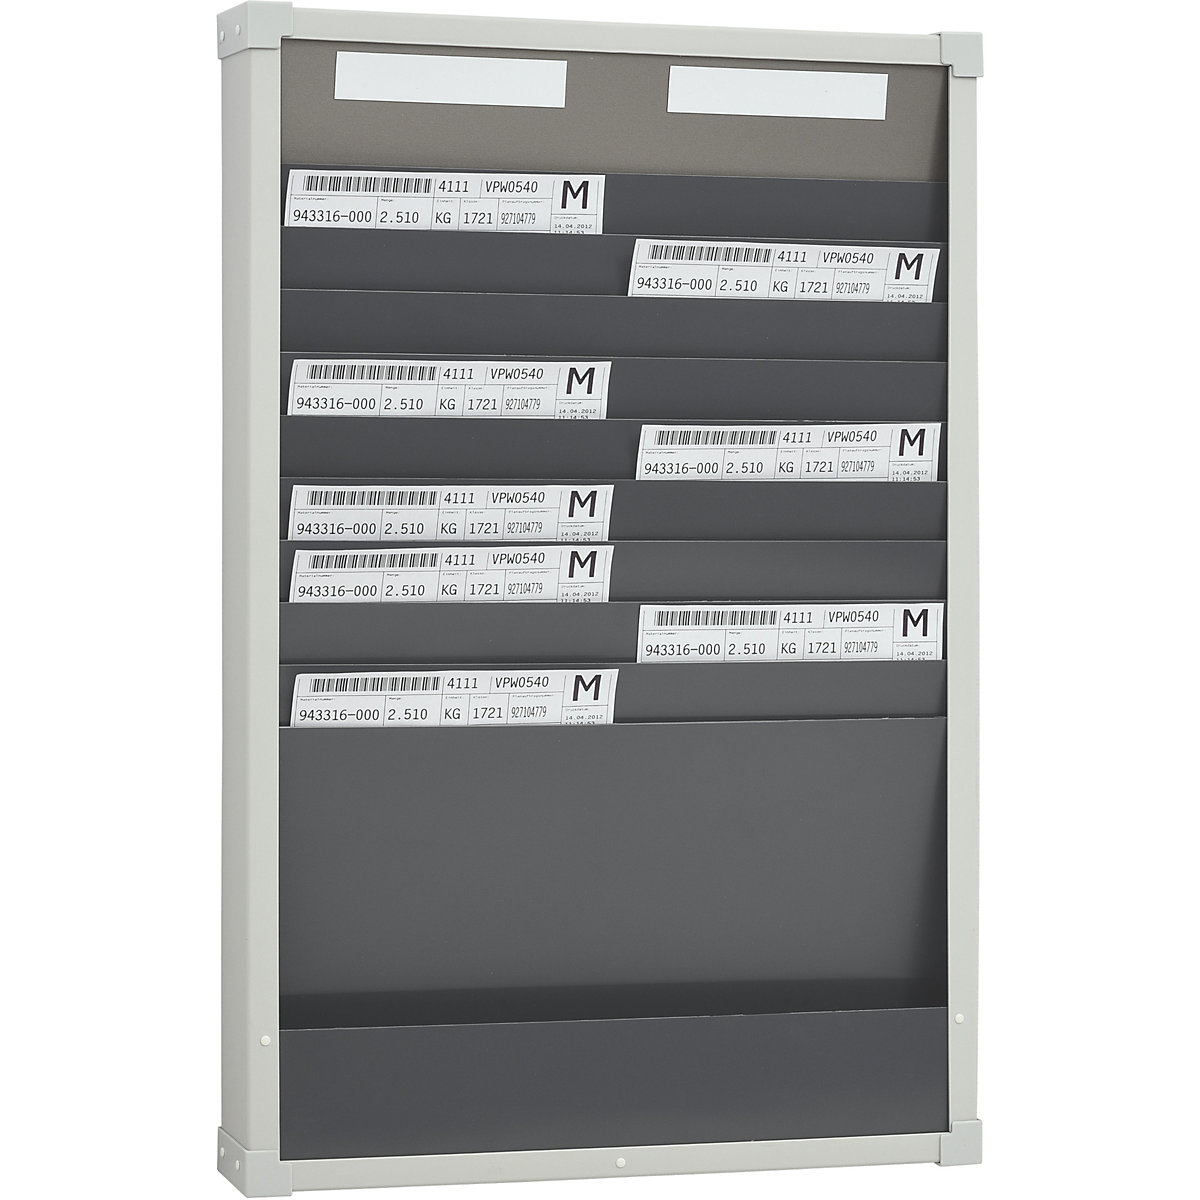 Panel modular clasificador para documentos – EICHNER, 10 compartimentos, altura 750 mm, con 2 hileras-10